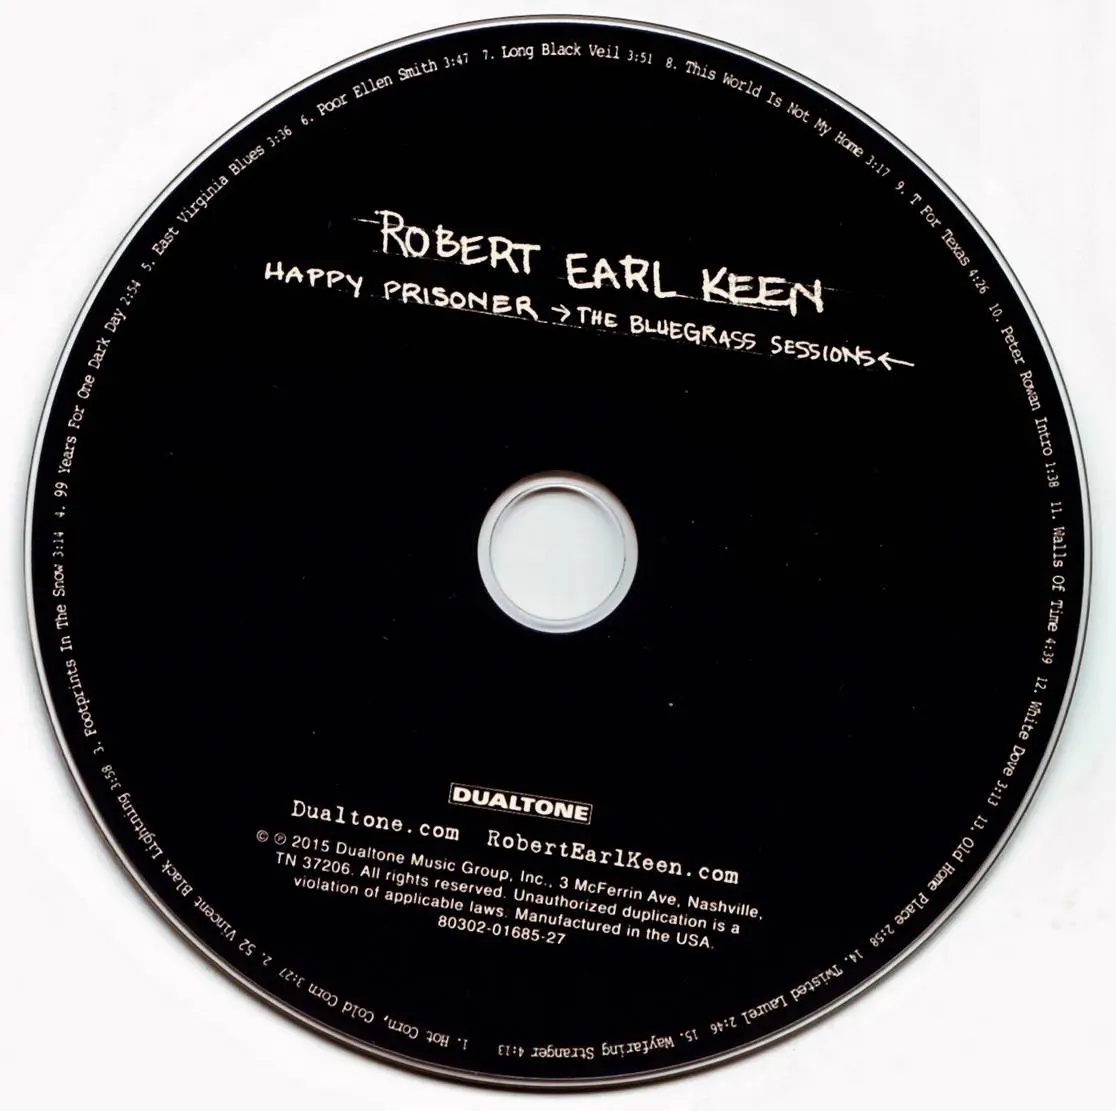 Robert Earl Keen Happy Prisoner The Bluegrass Sessions 2015 {dualtone Music 80302 01685 27